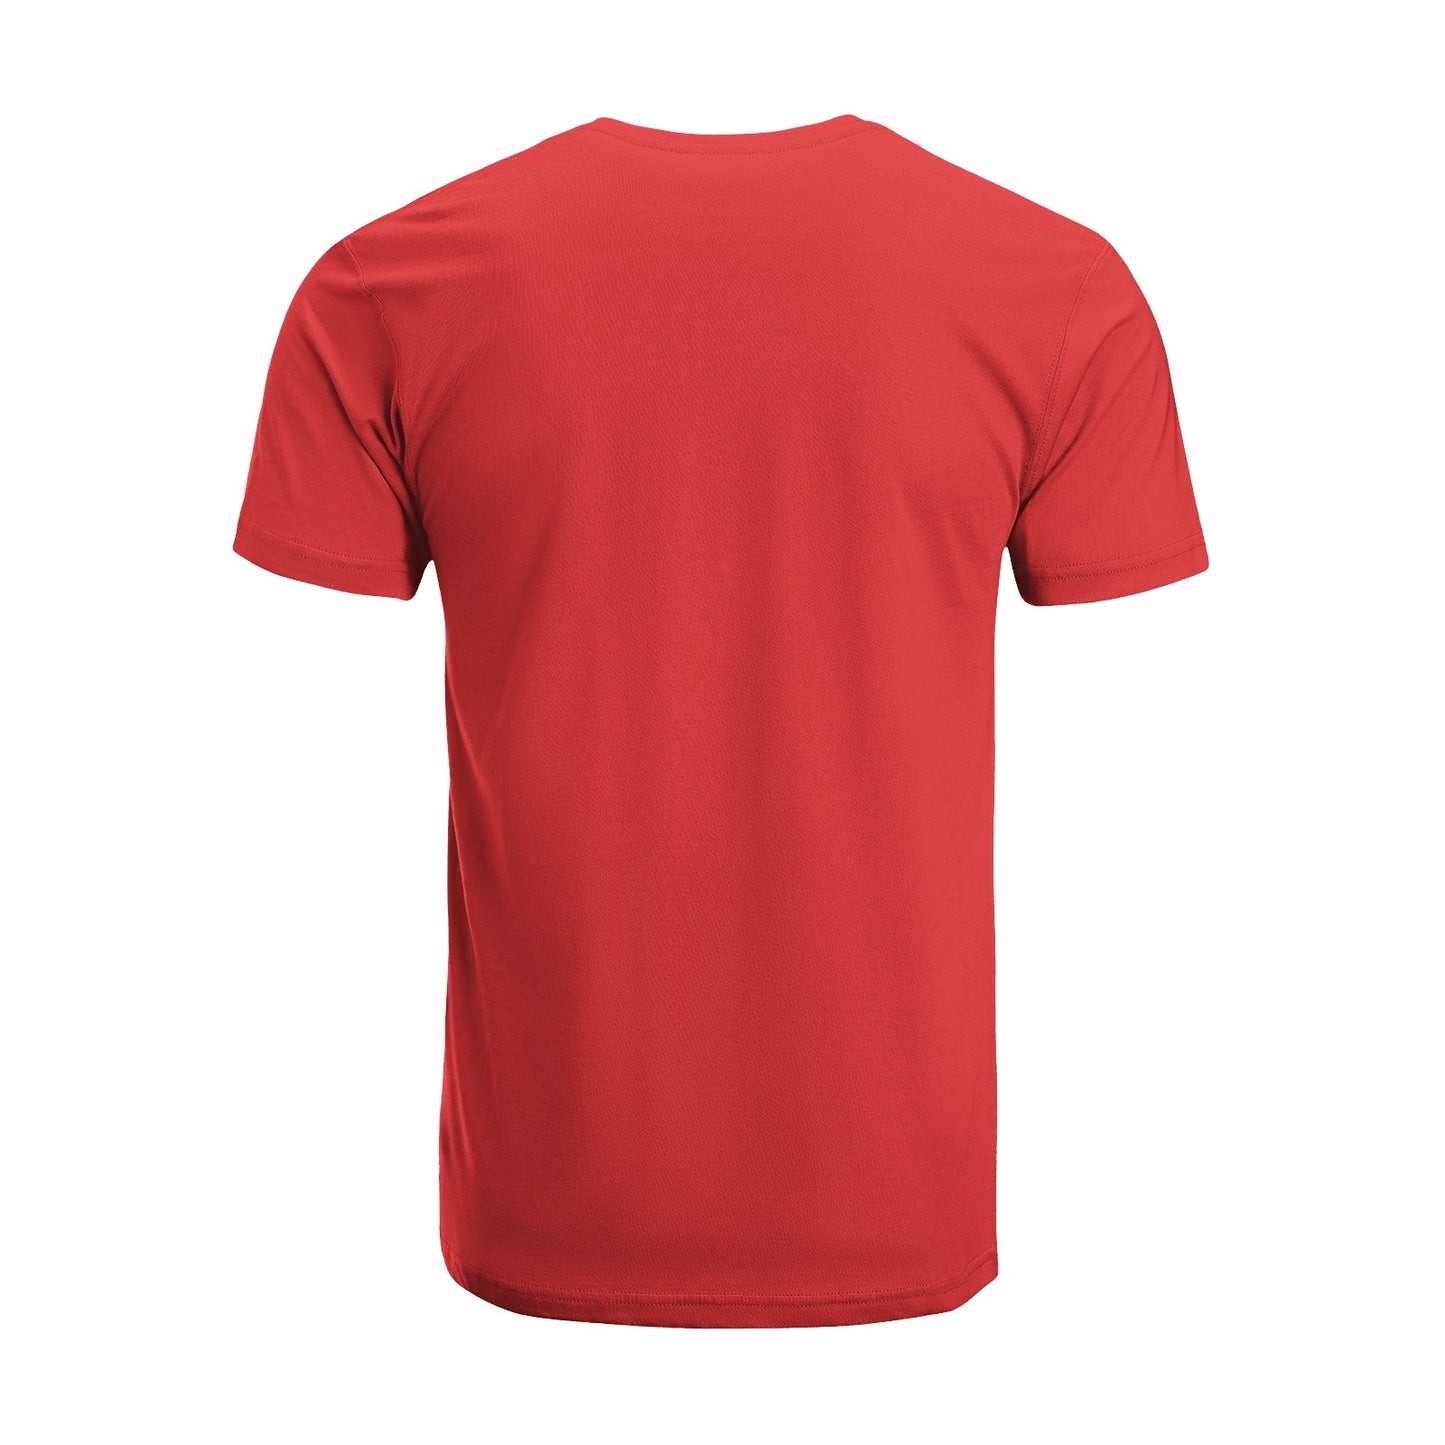 Unisex Short Sleeve Crew Neck Cotton Jersey T-Shirt MOM 08